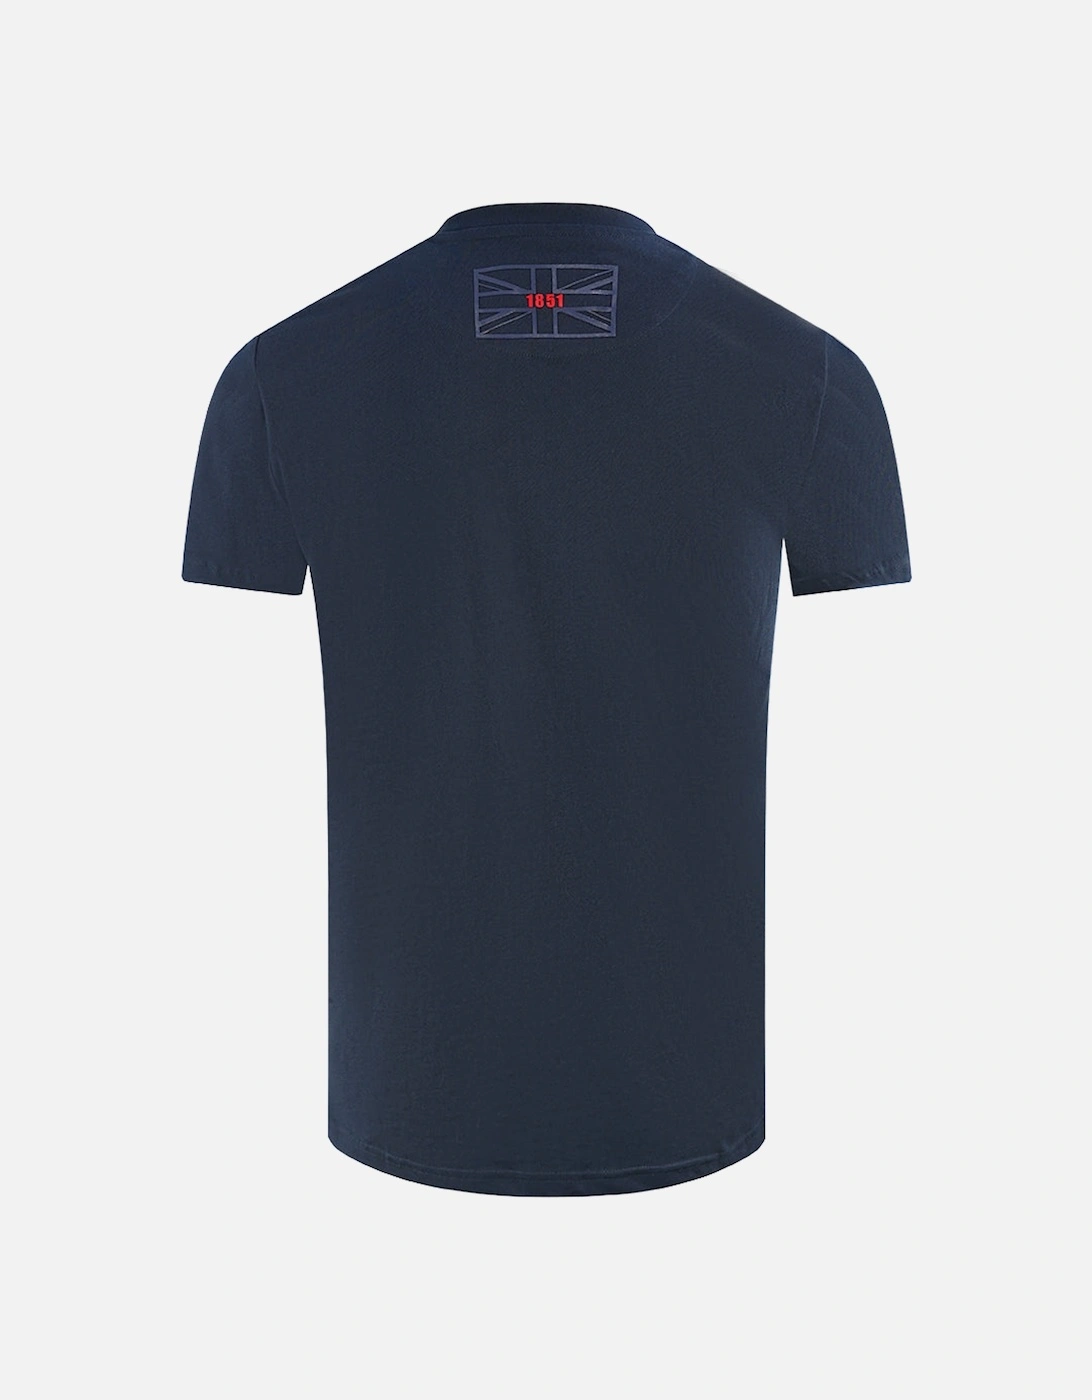 London Circle Logo Navy Blue T-Shirt